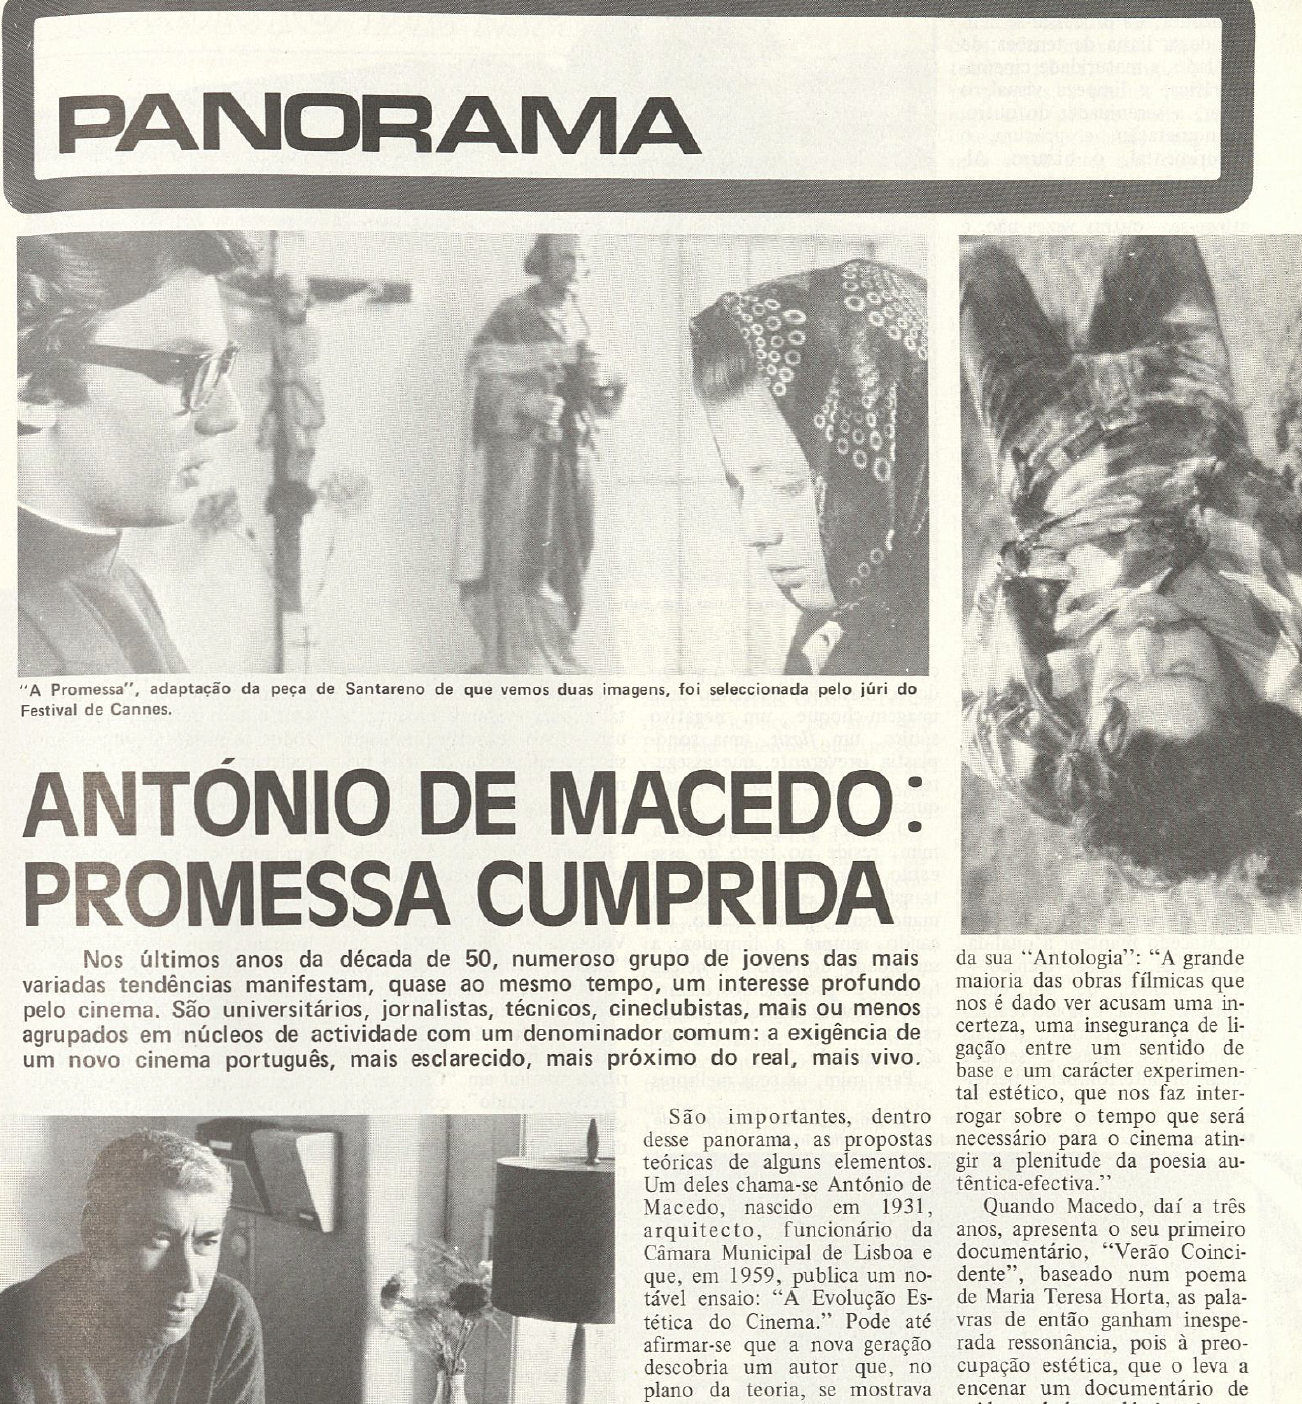 "António de Macedo a promessa cumprida"